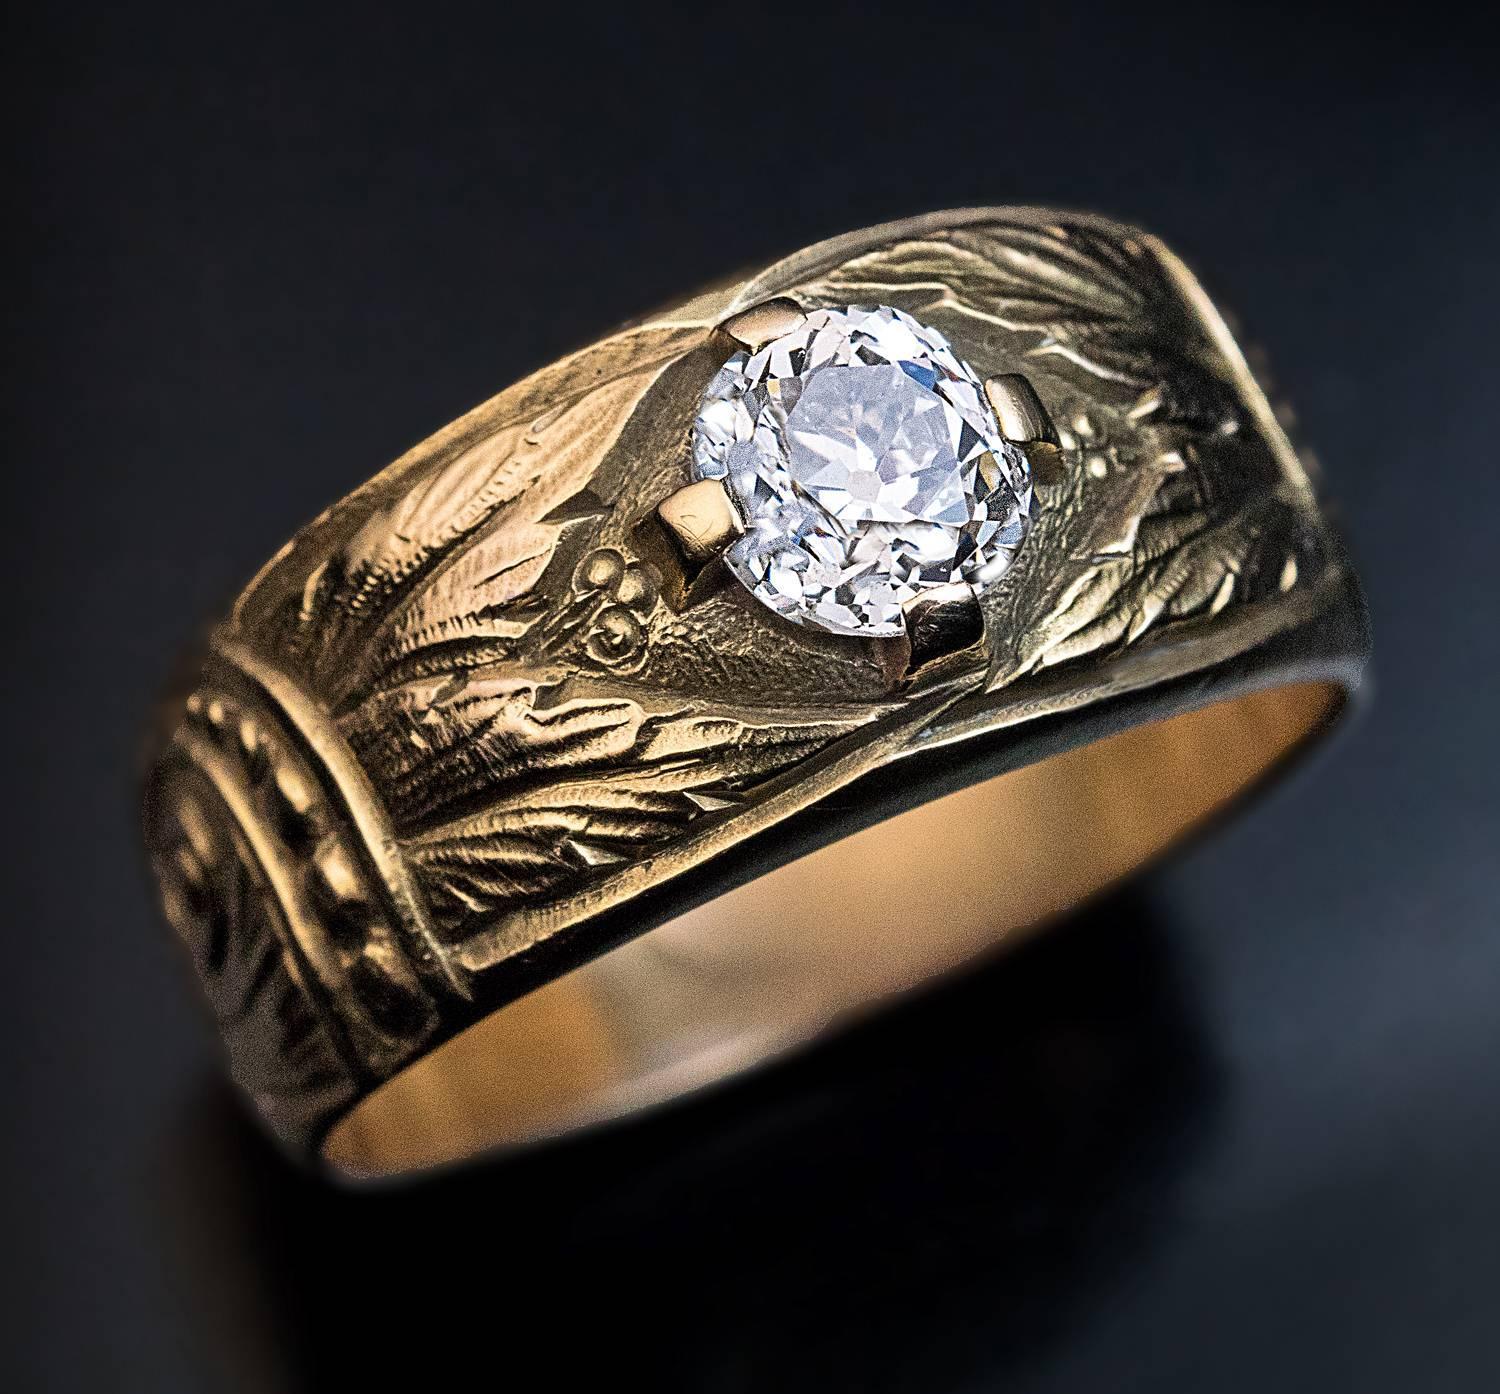 Antique Art Nouveau Diamond Gold Men's Ring at 1stdibs